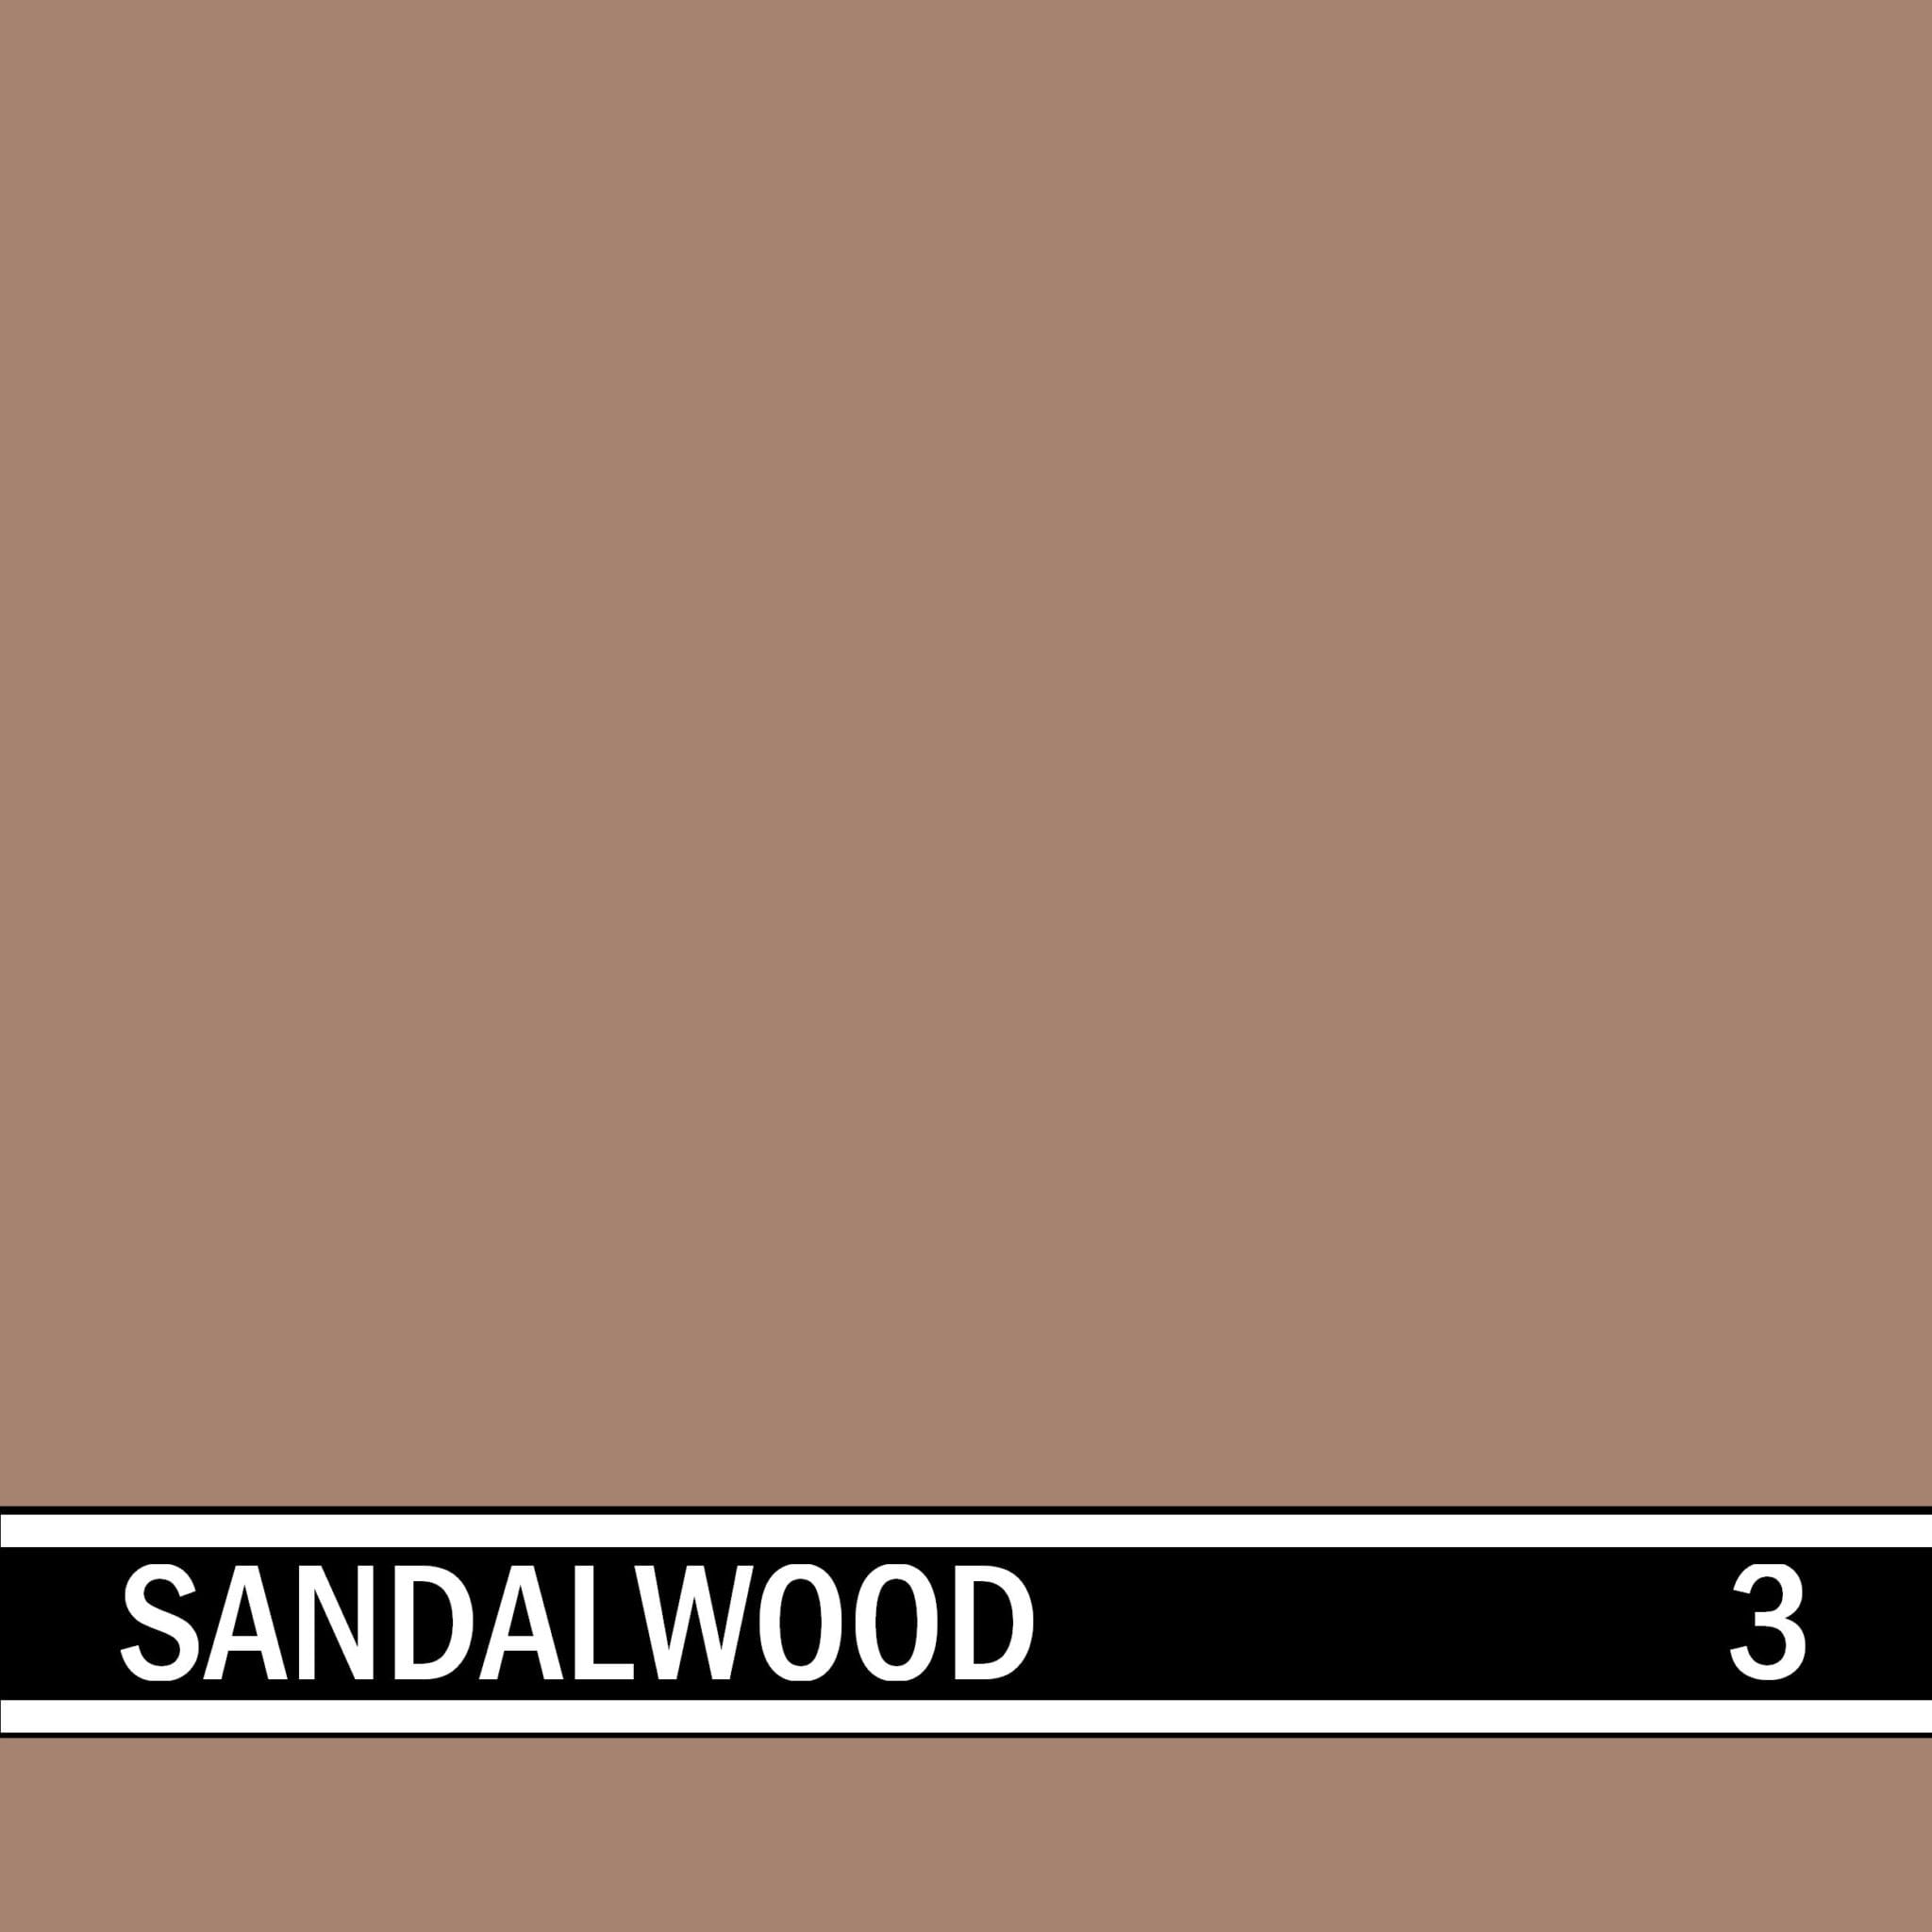 Sandalwood integral concrete color for stamped concrete and decorative colored concrete